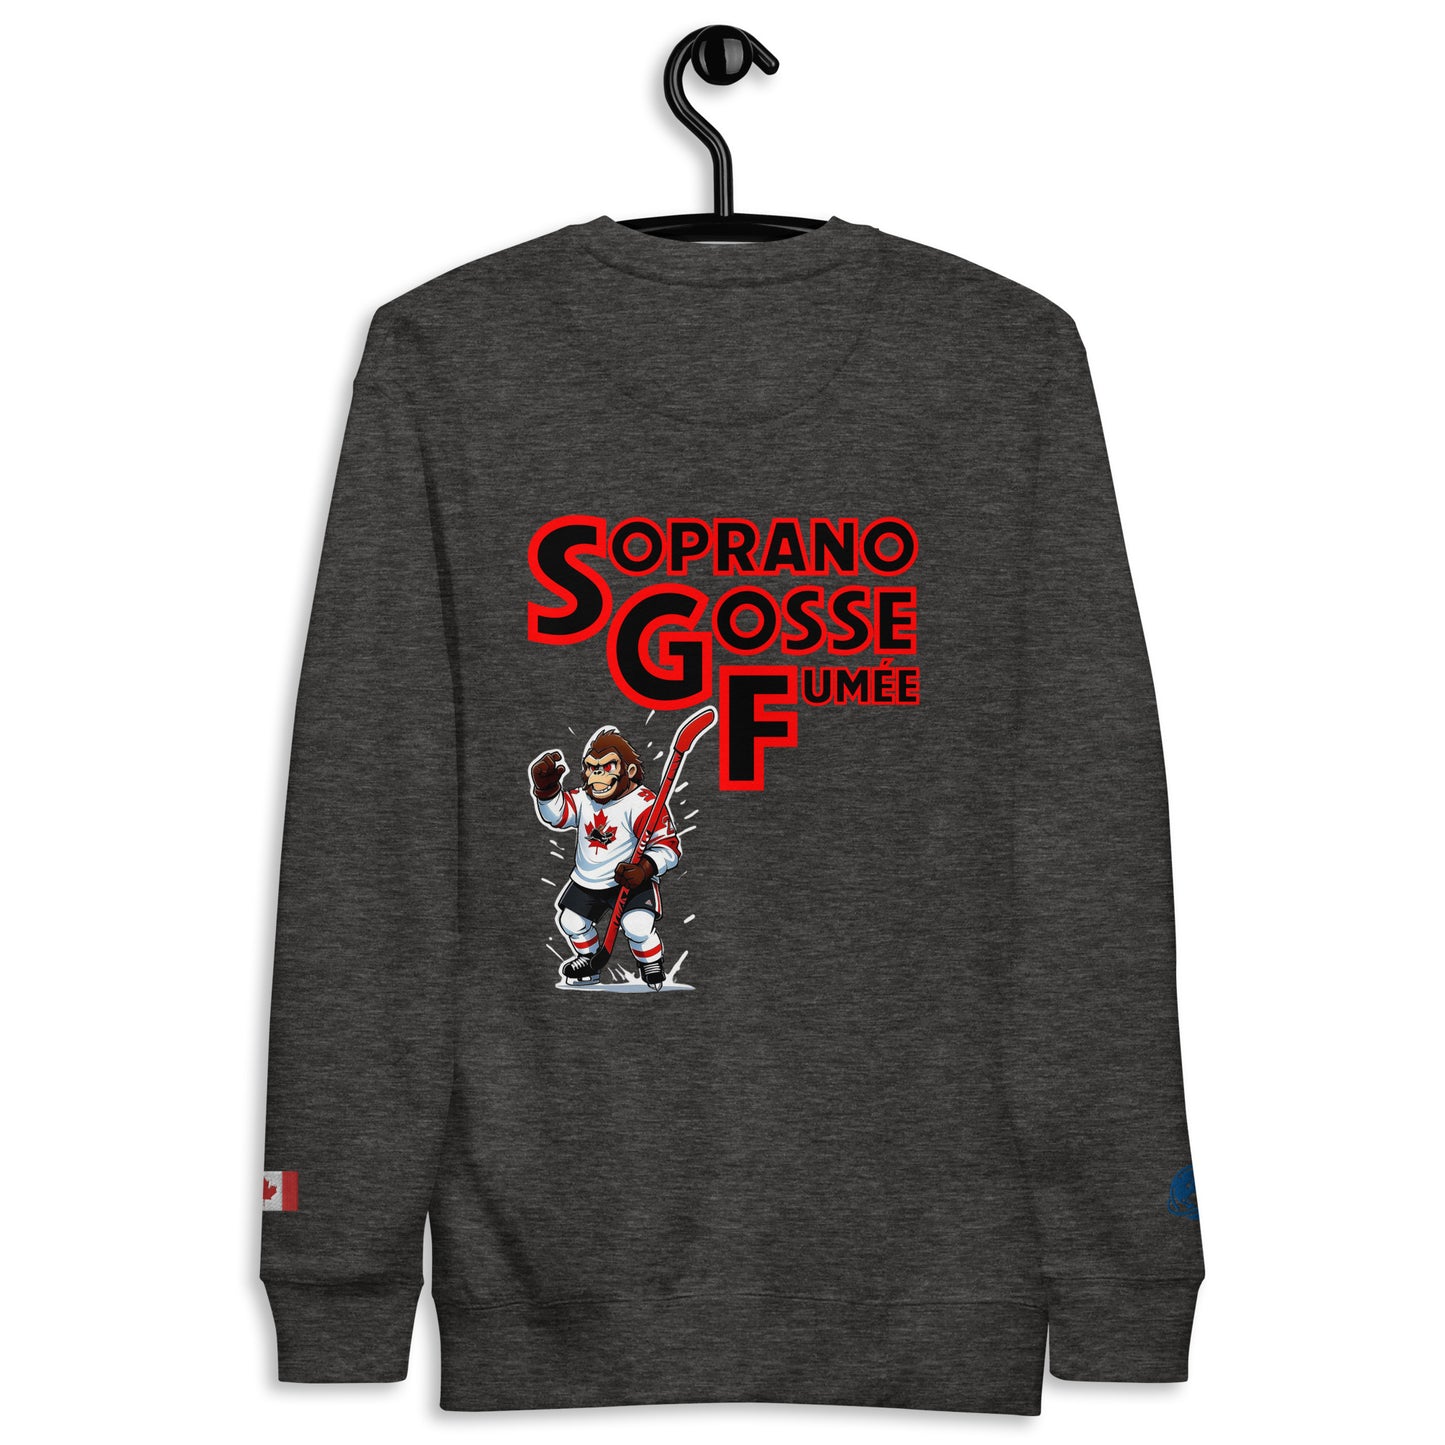 BigSmoke Soprano Clothing: BigSmoke Soprano Worldwide Collection: Canada Sweatshirt (Canada Edition)